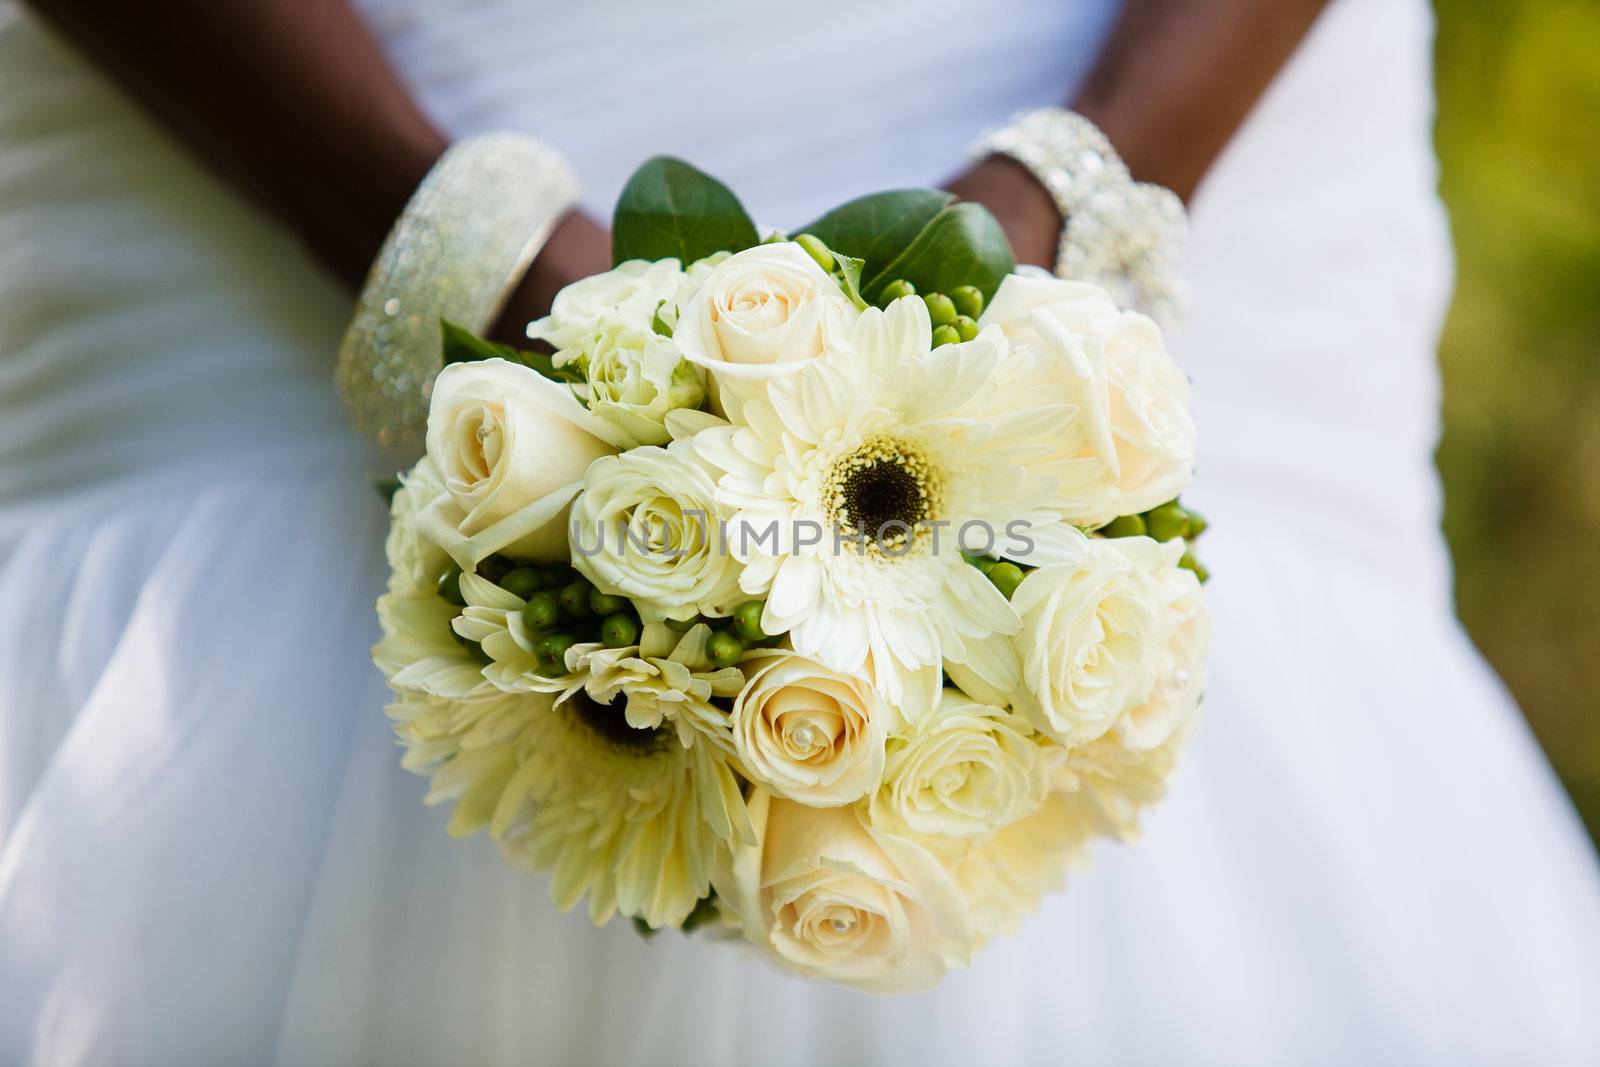 Black woman holding a wedding bouquet